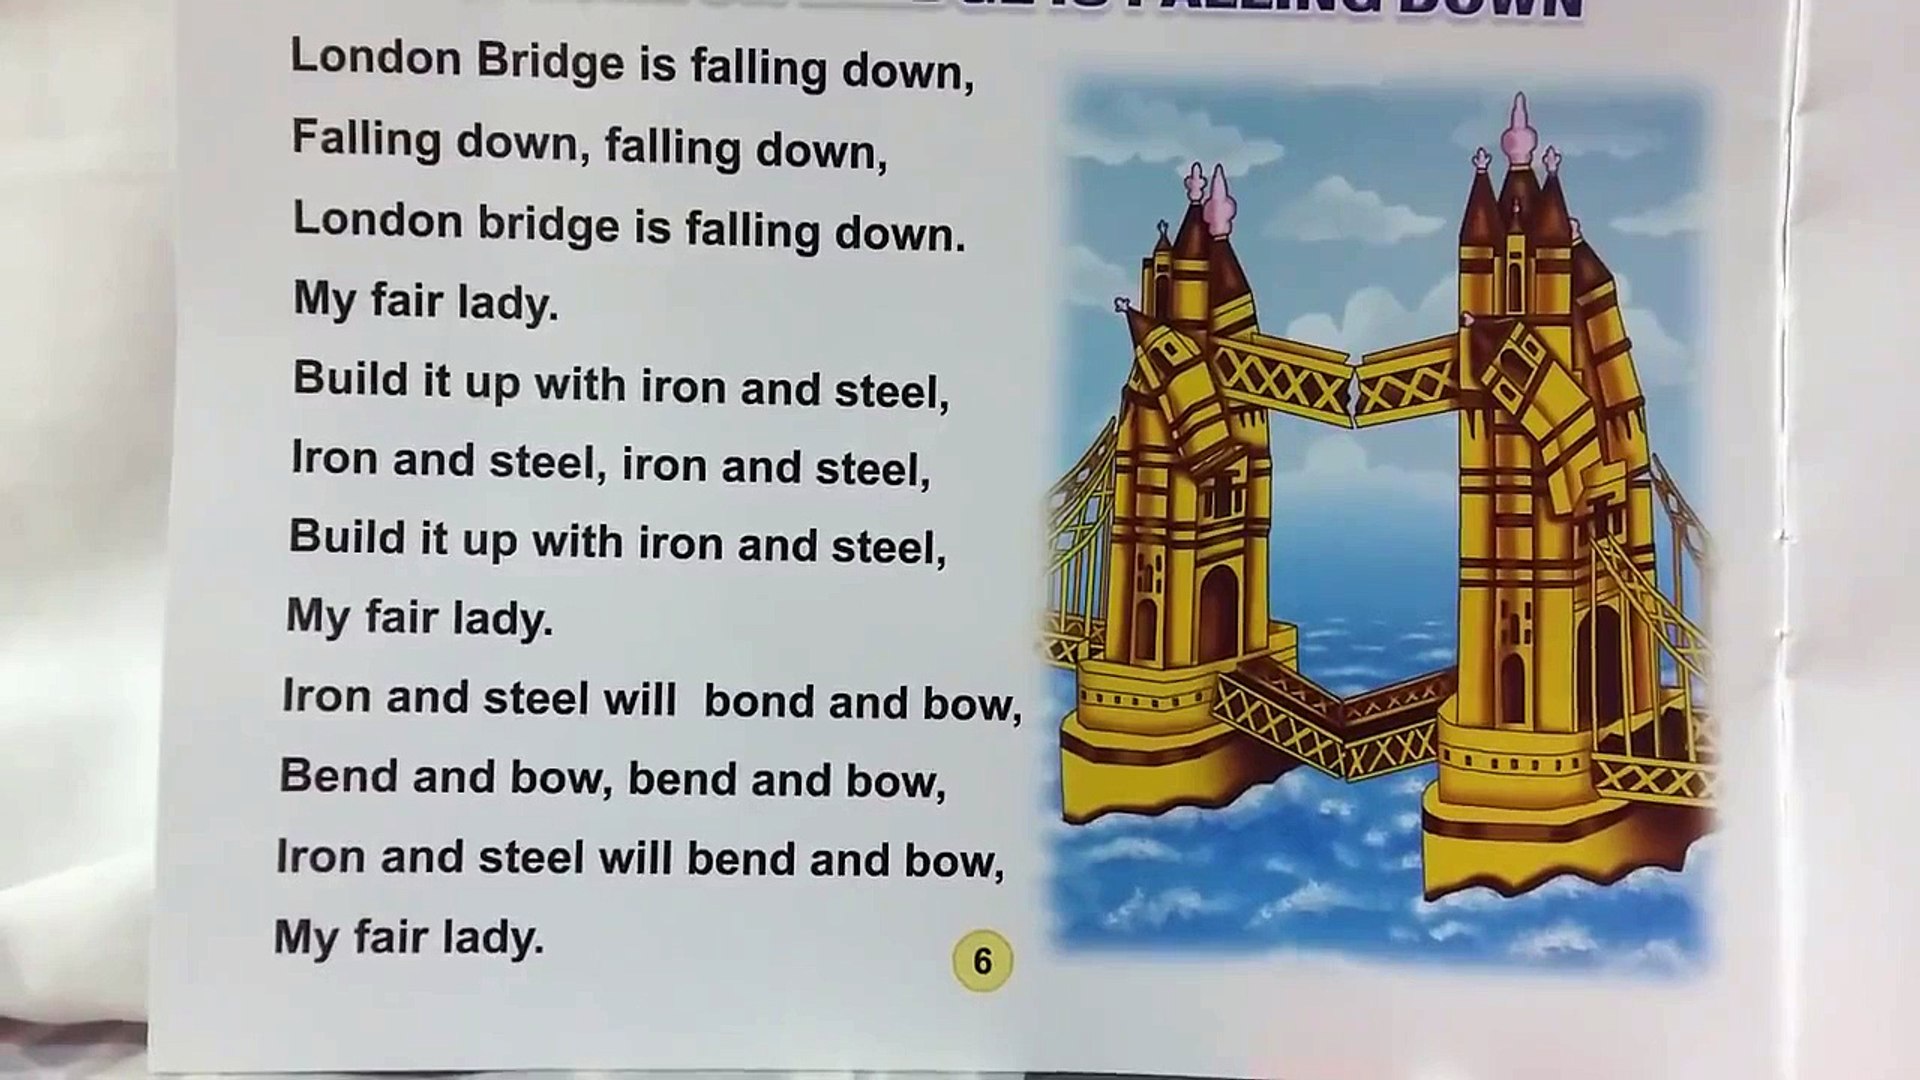 Бридж на английском. London Bridge is Falling. London Bridge is Falling down текст. Падает падает Лондонский мост. Лондонский мост падает на английском.